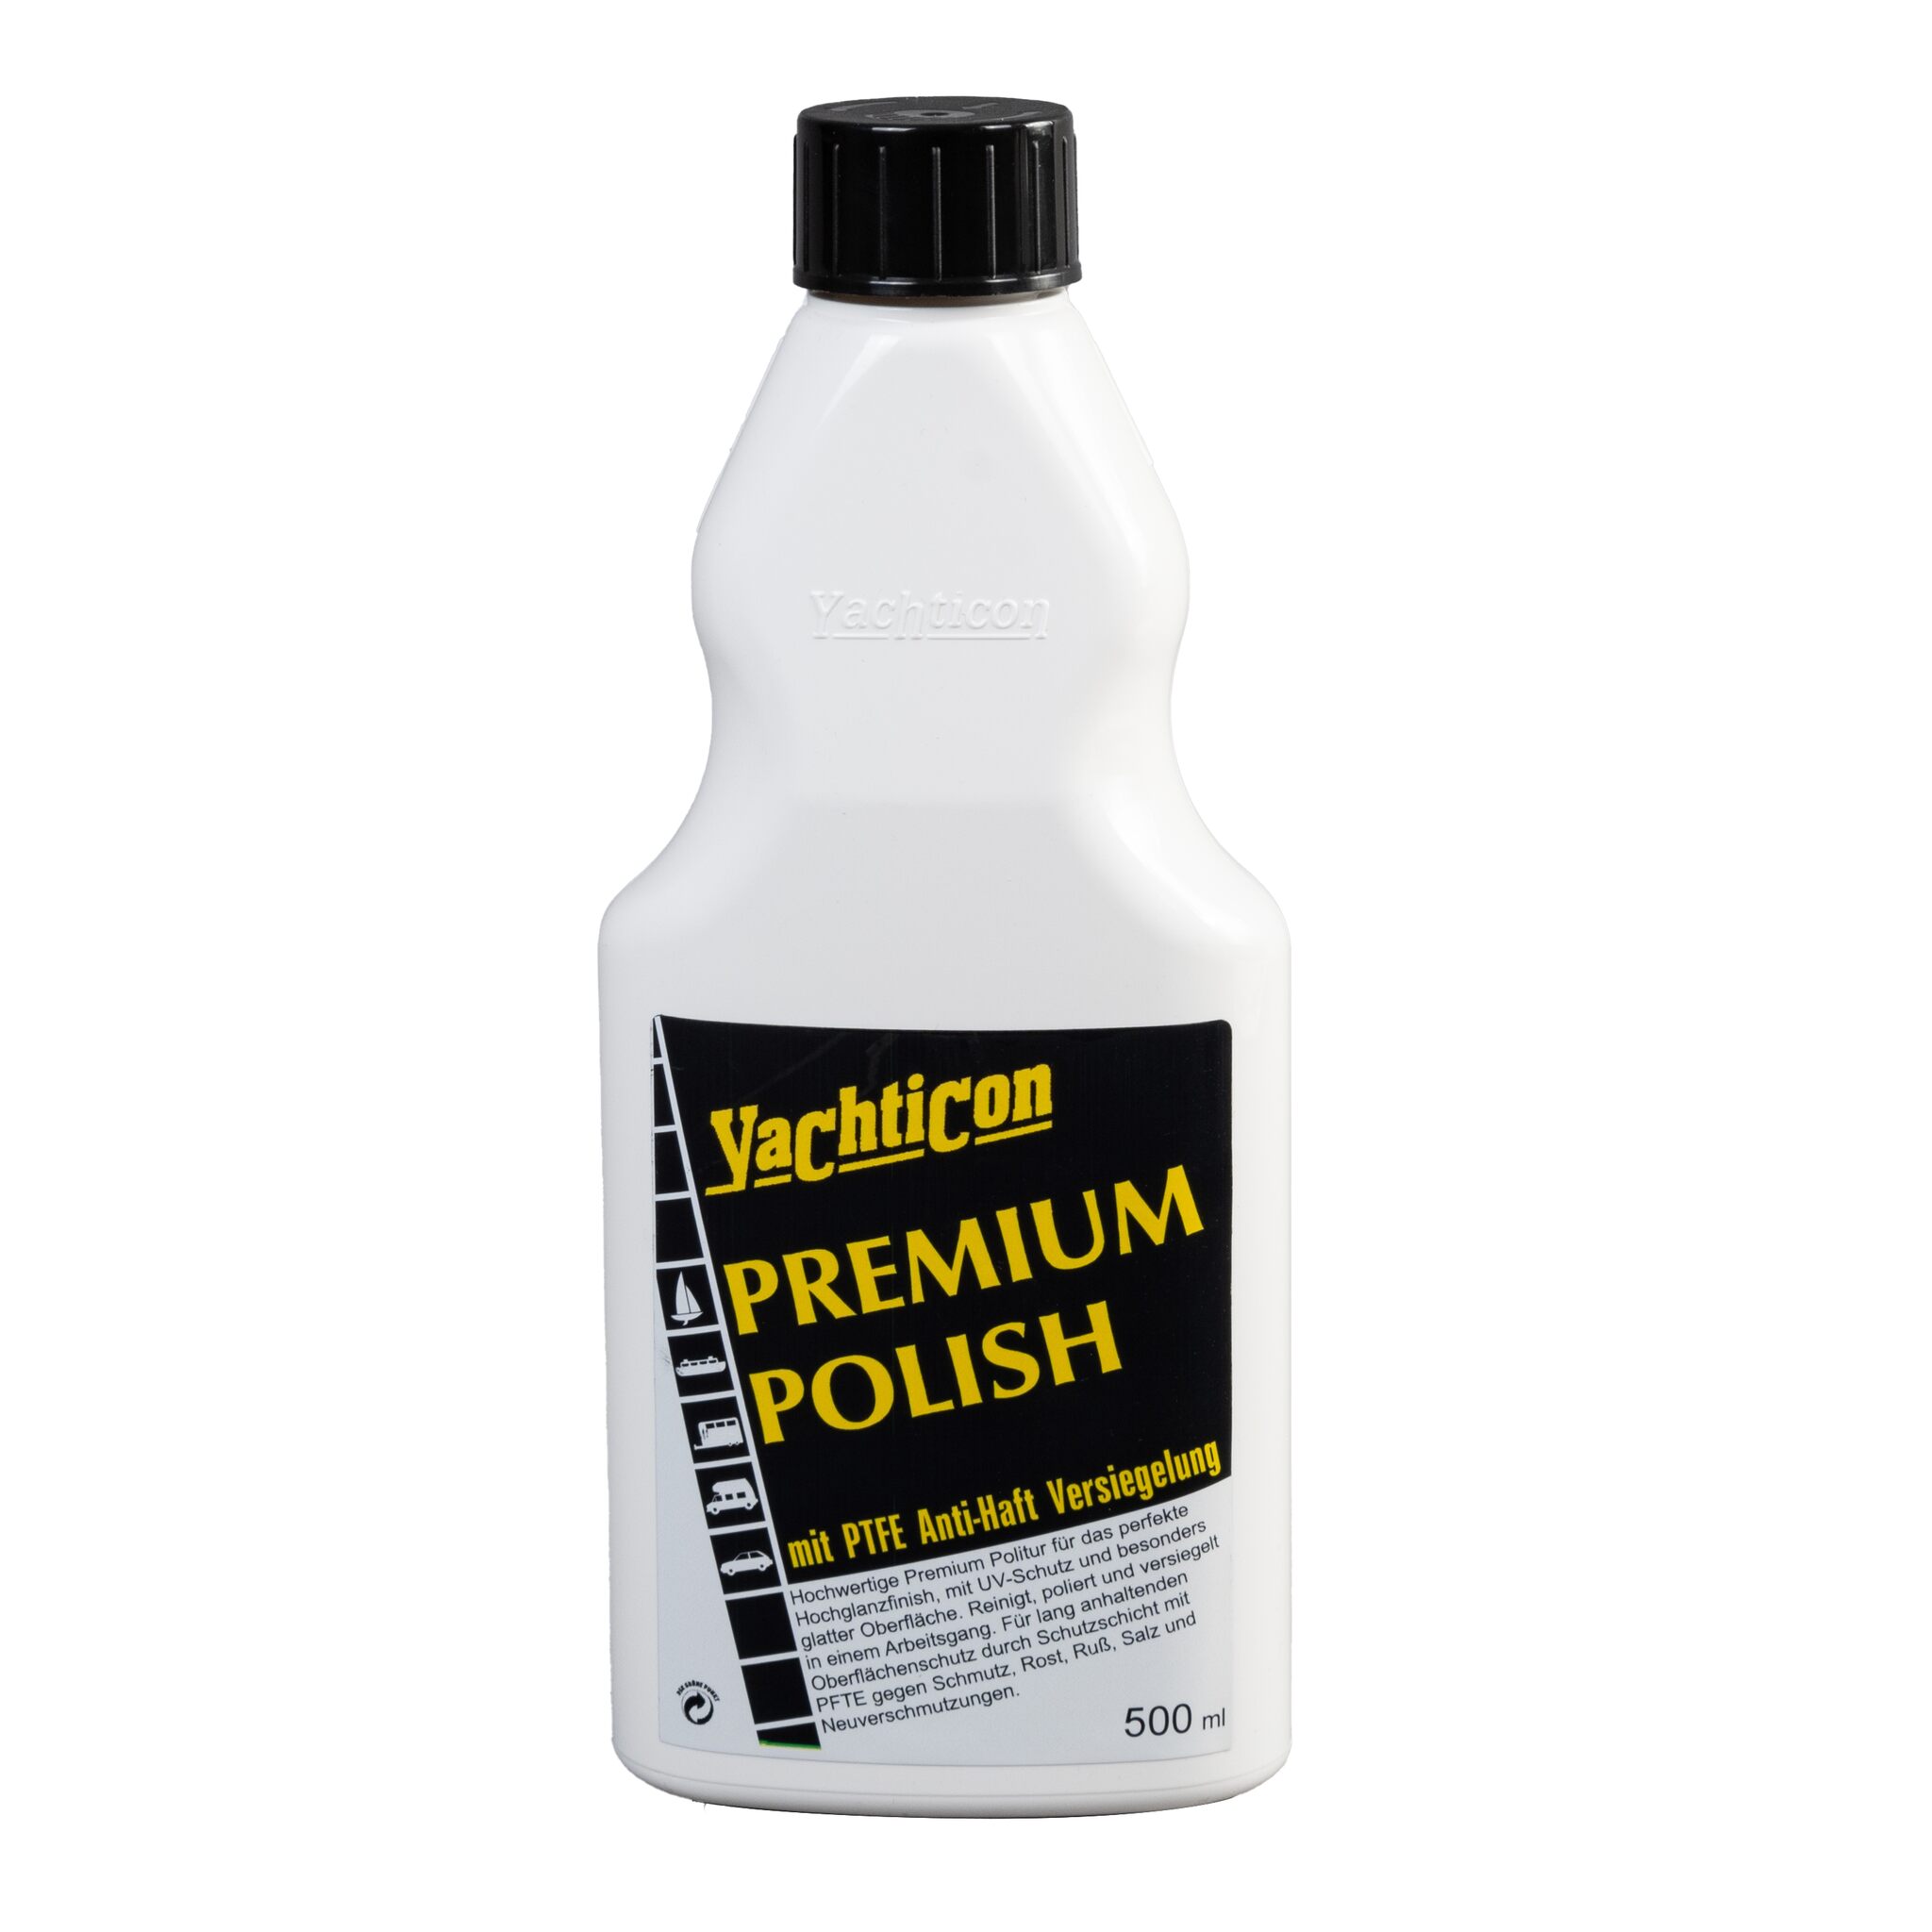 Yachticon Premium Polish liquid